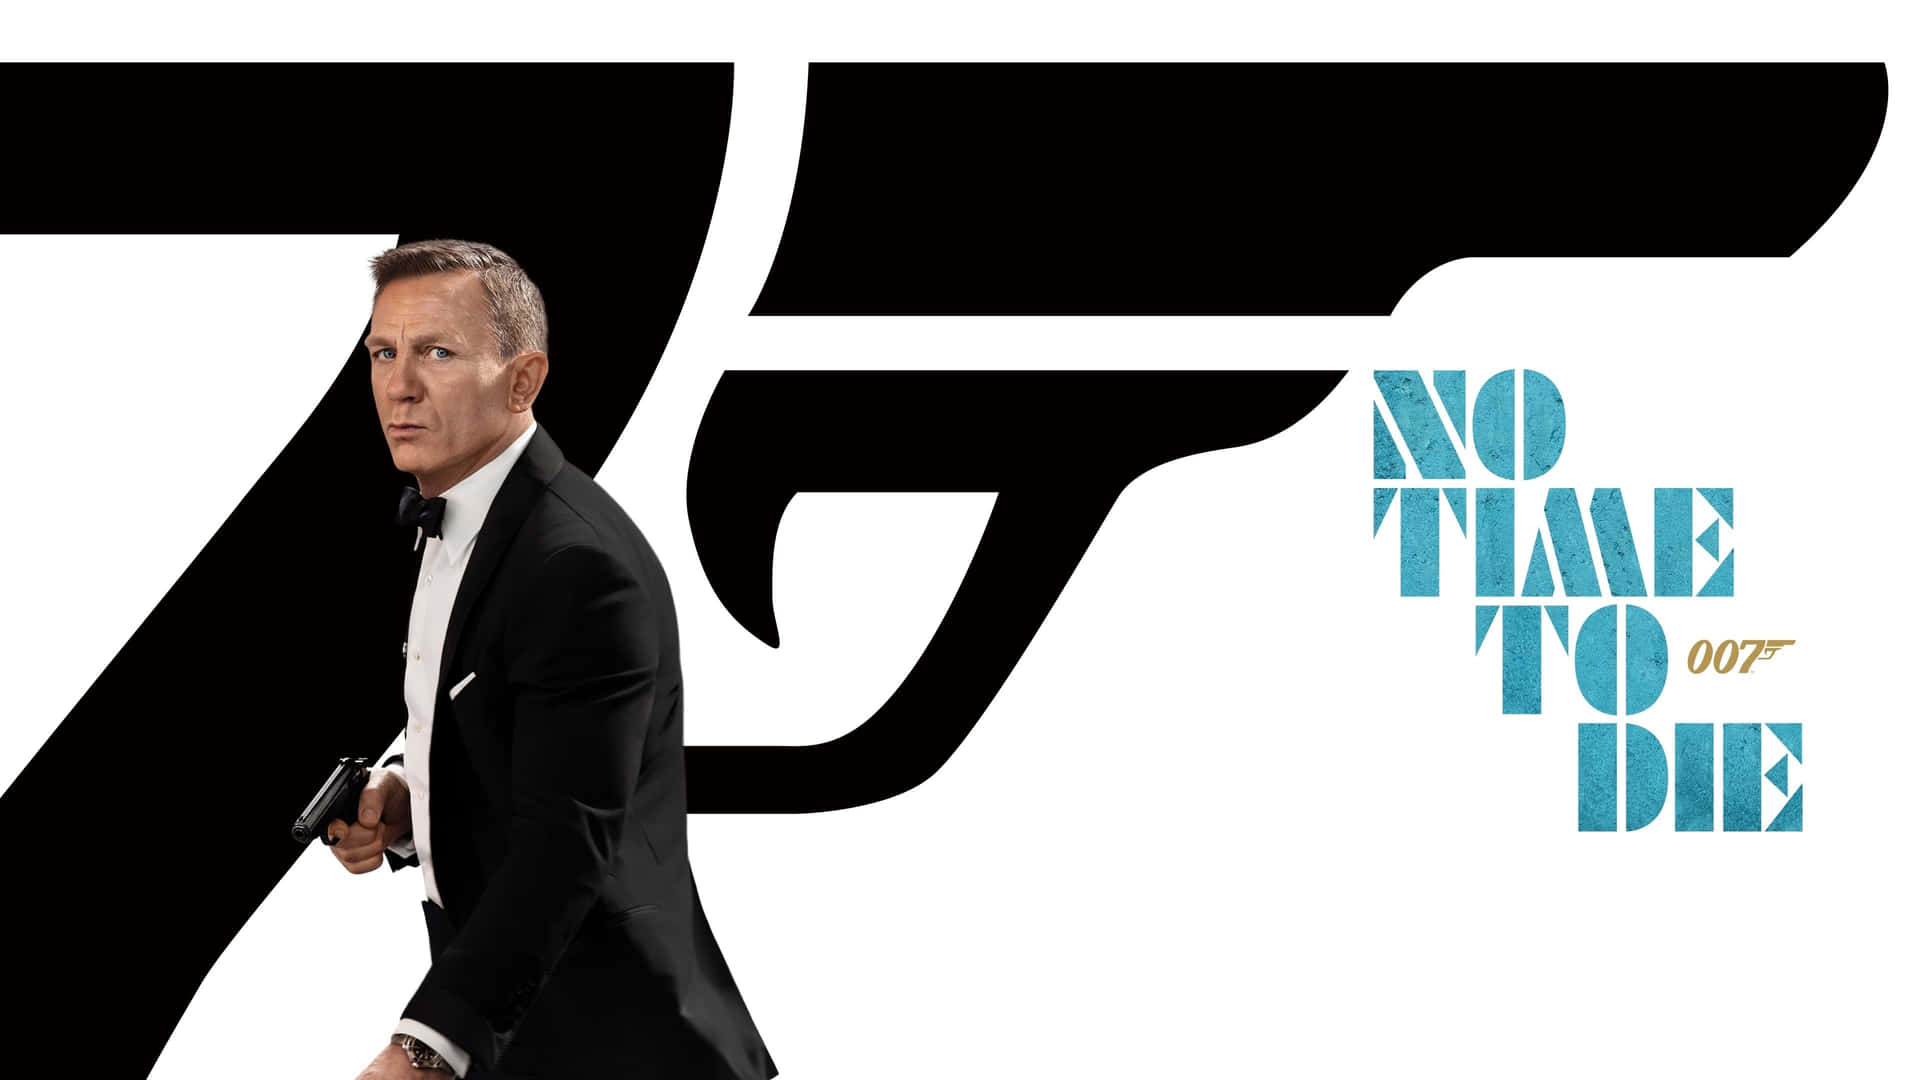 James Bond No Time To Die Promo Wallpaper